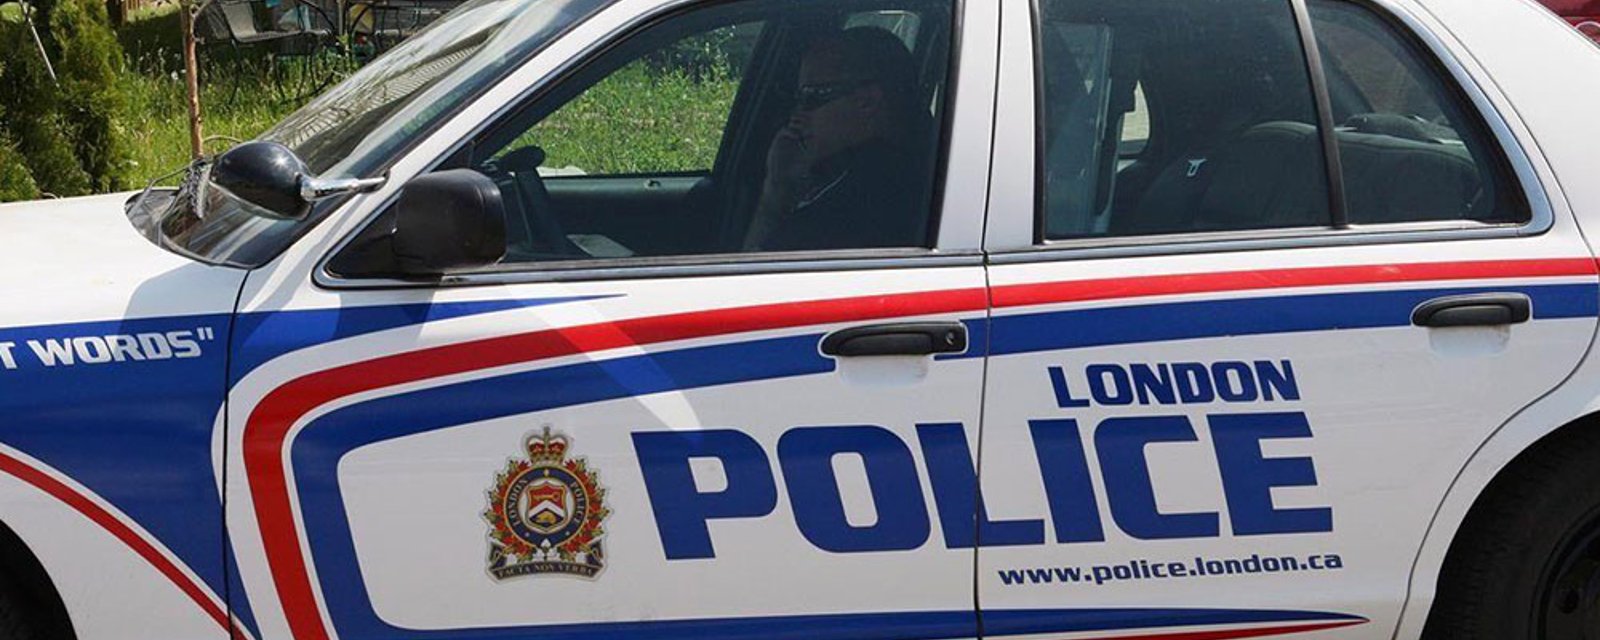 London Police facing serious backlash following Hockey Canada investigation